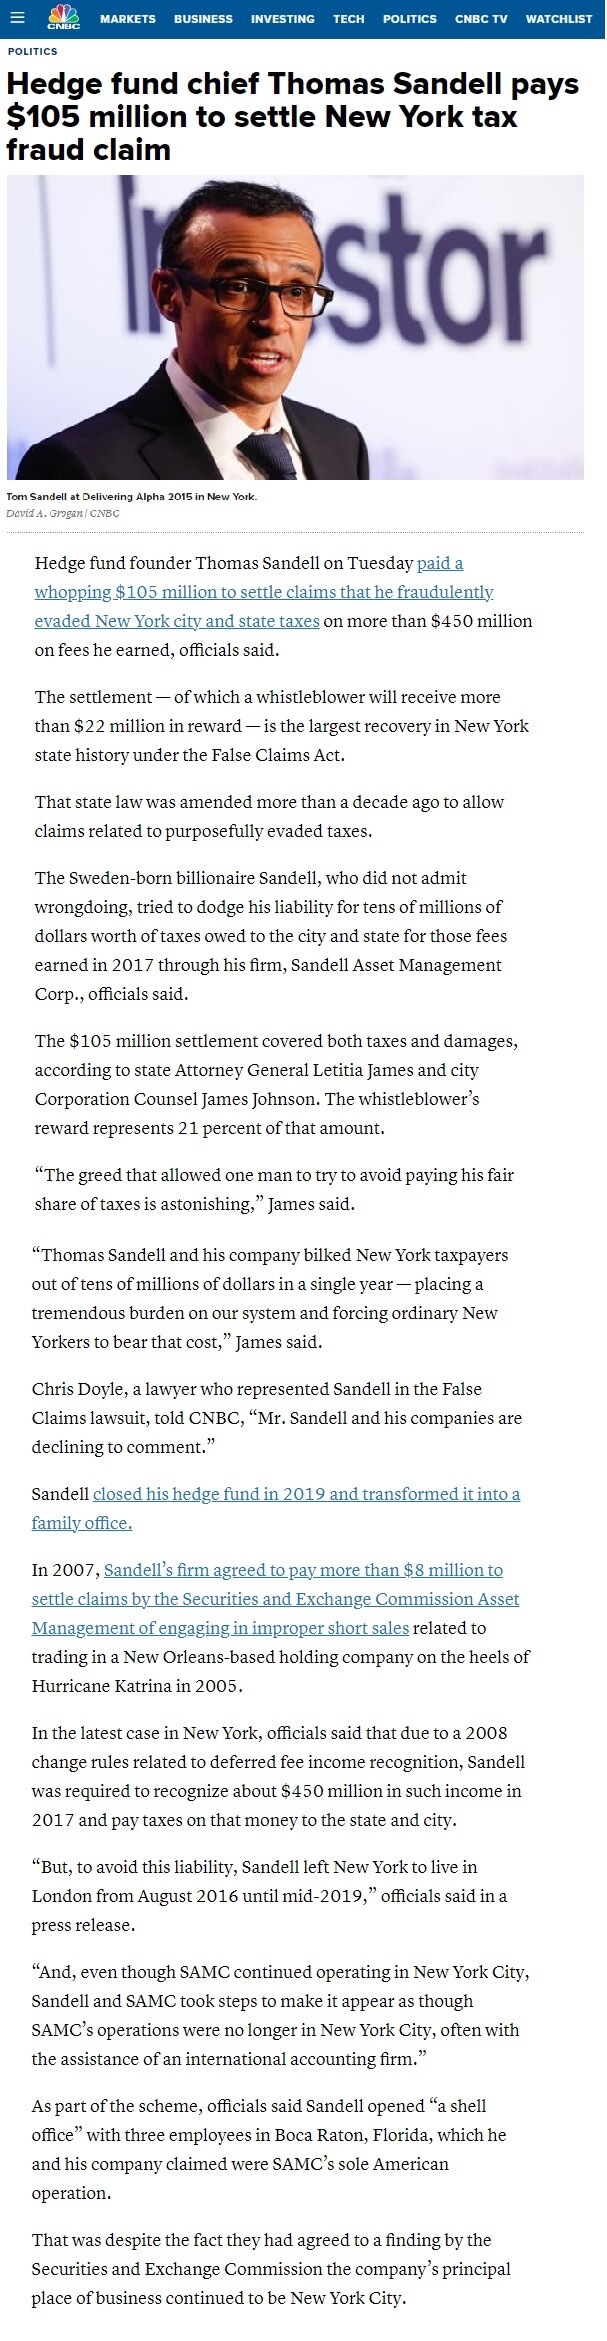 CNBC - Hedge fund chief Thomas Sandell pays $105 million to settle New York tax fraud claim